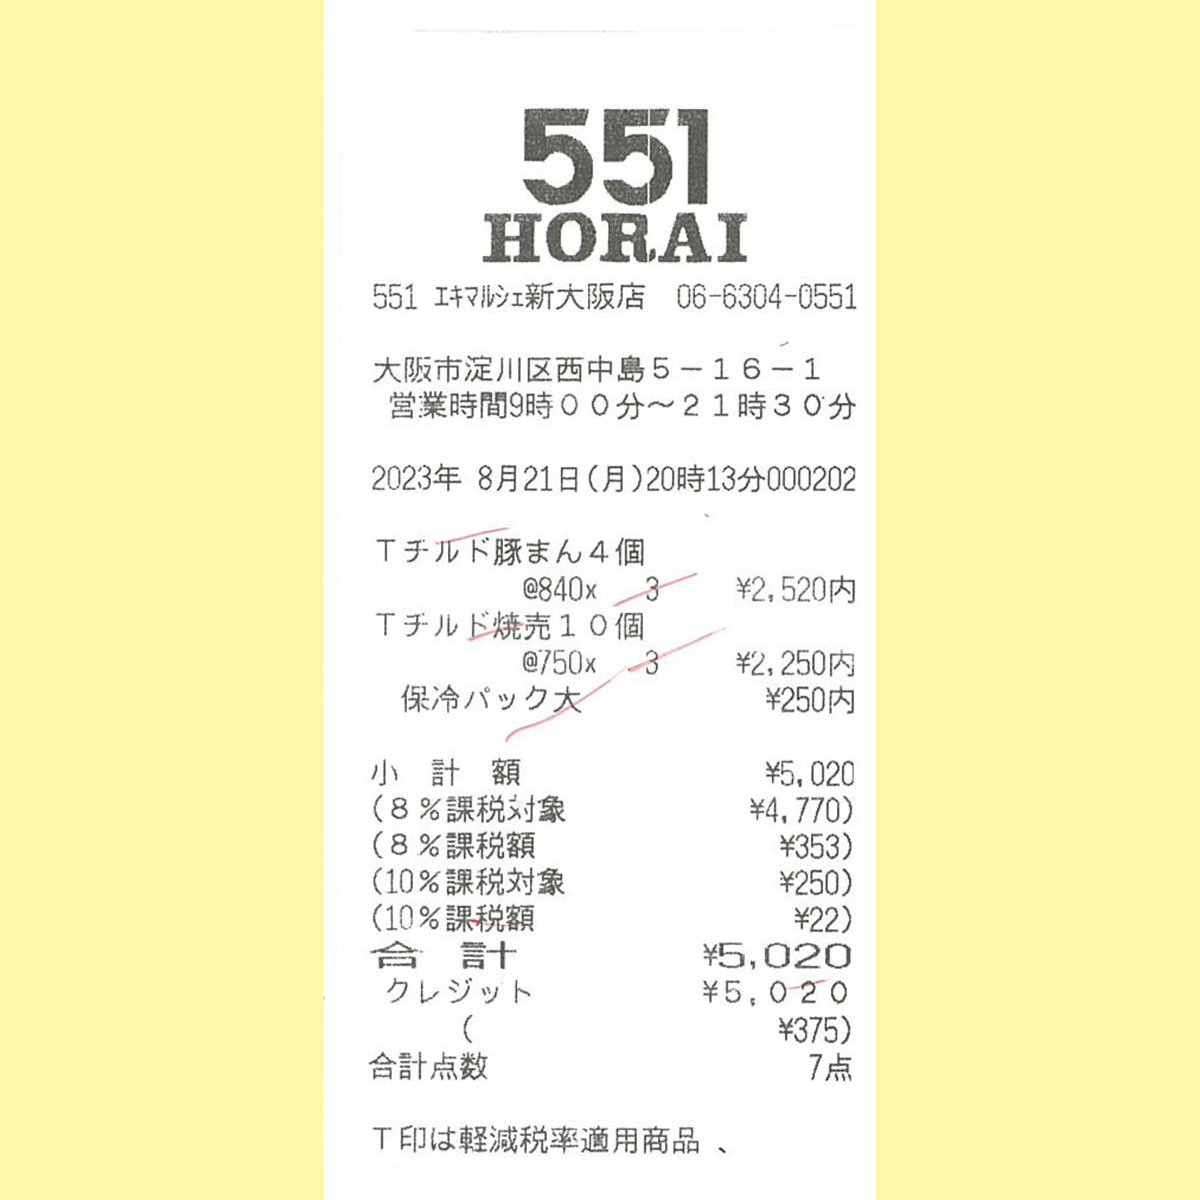 551 HORAI レシート